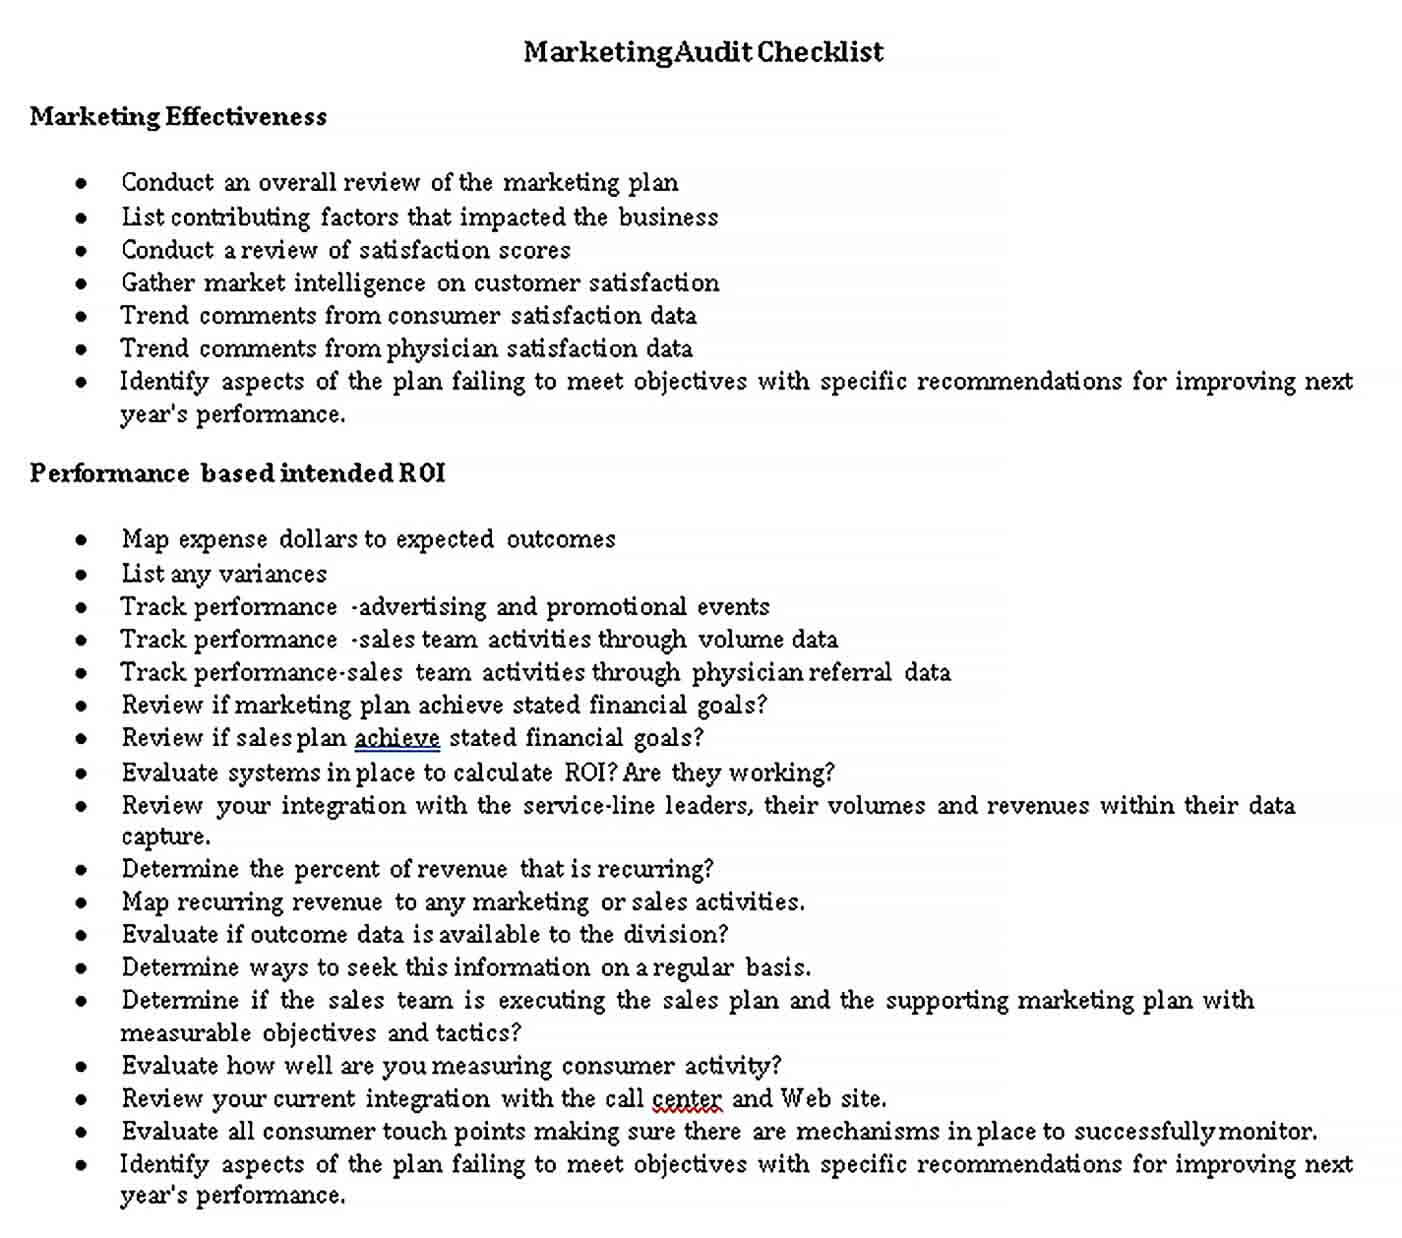 Sample Marketing Audit Checklist Template